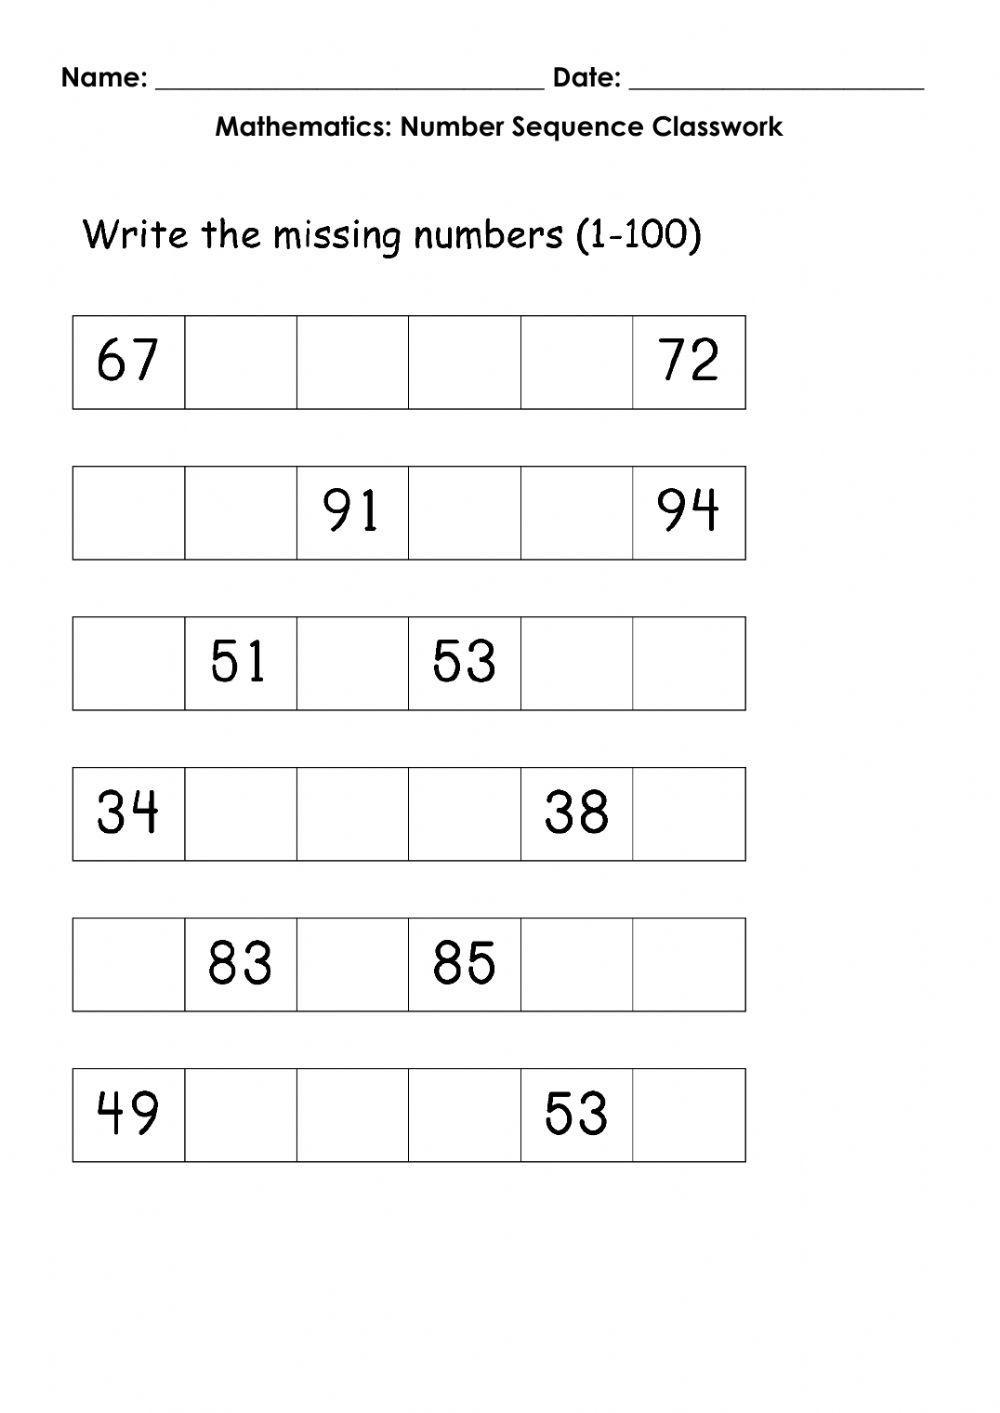 mathematics Number Sequence Classwork